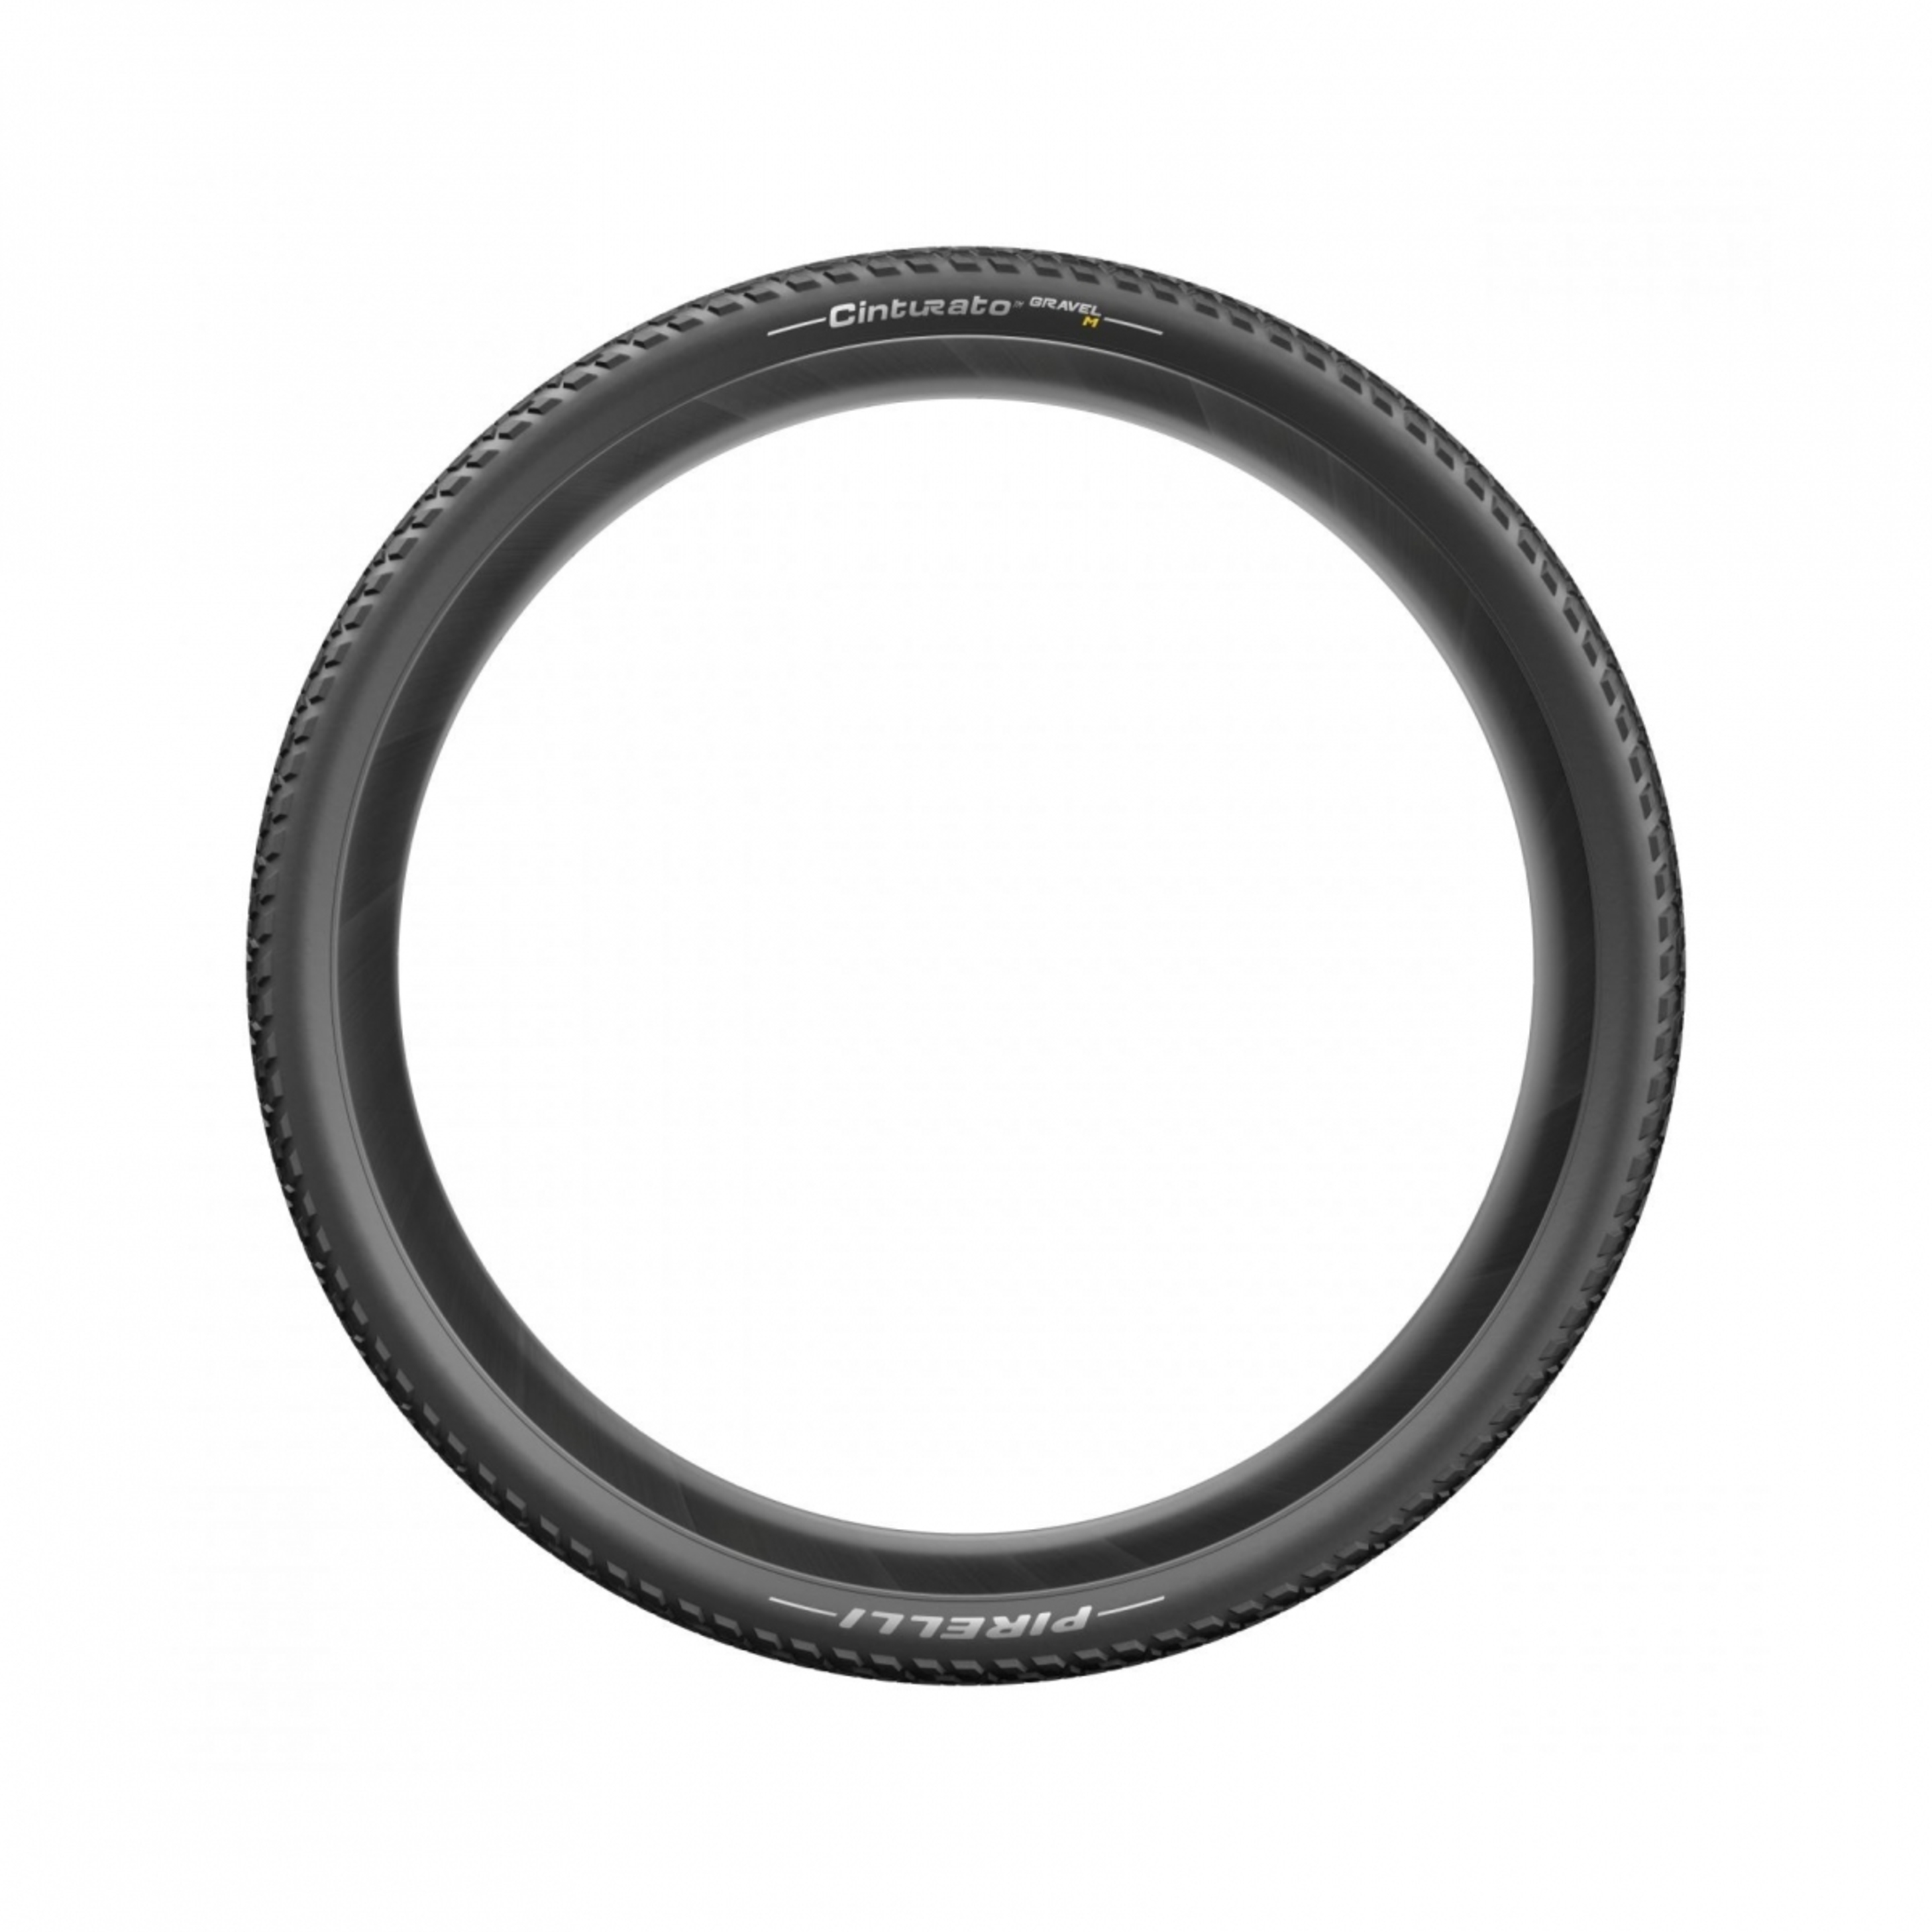 Neumático Pirelli Cinturato Gravel Mixto Tlr 700x45 - negro - 